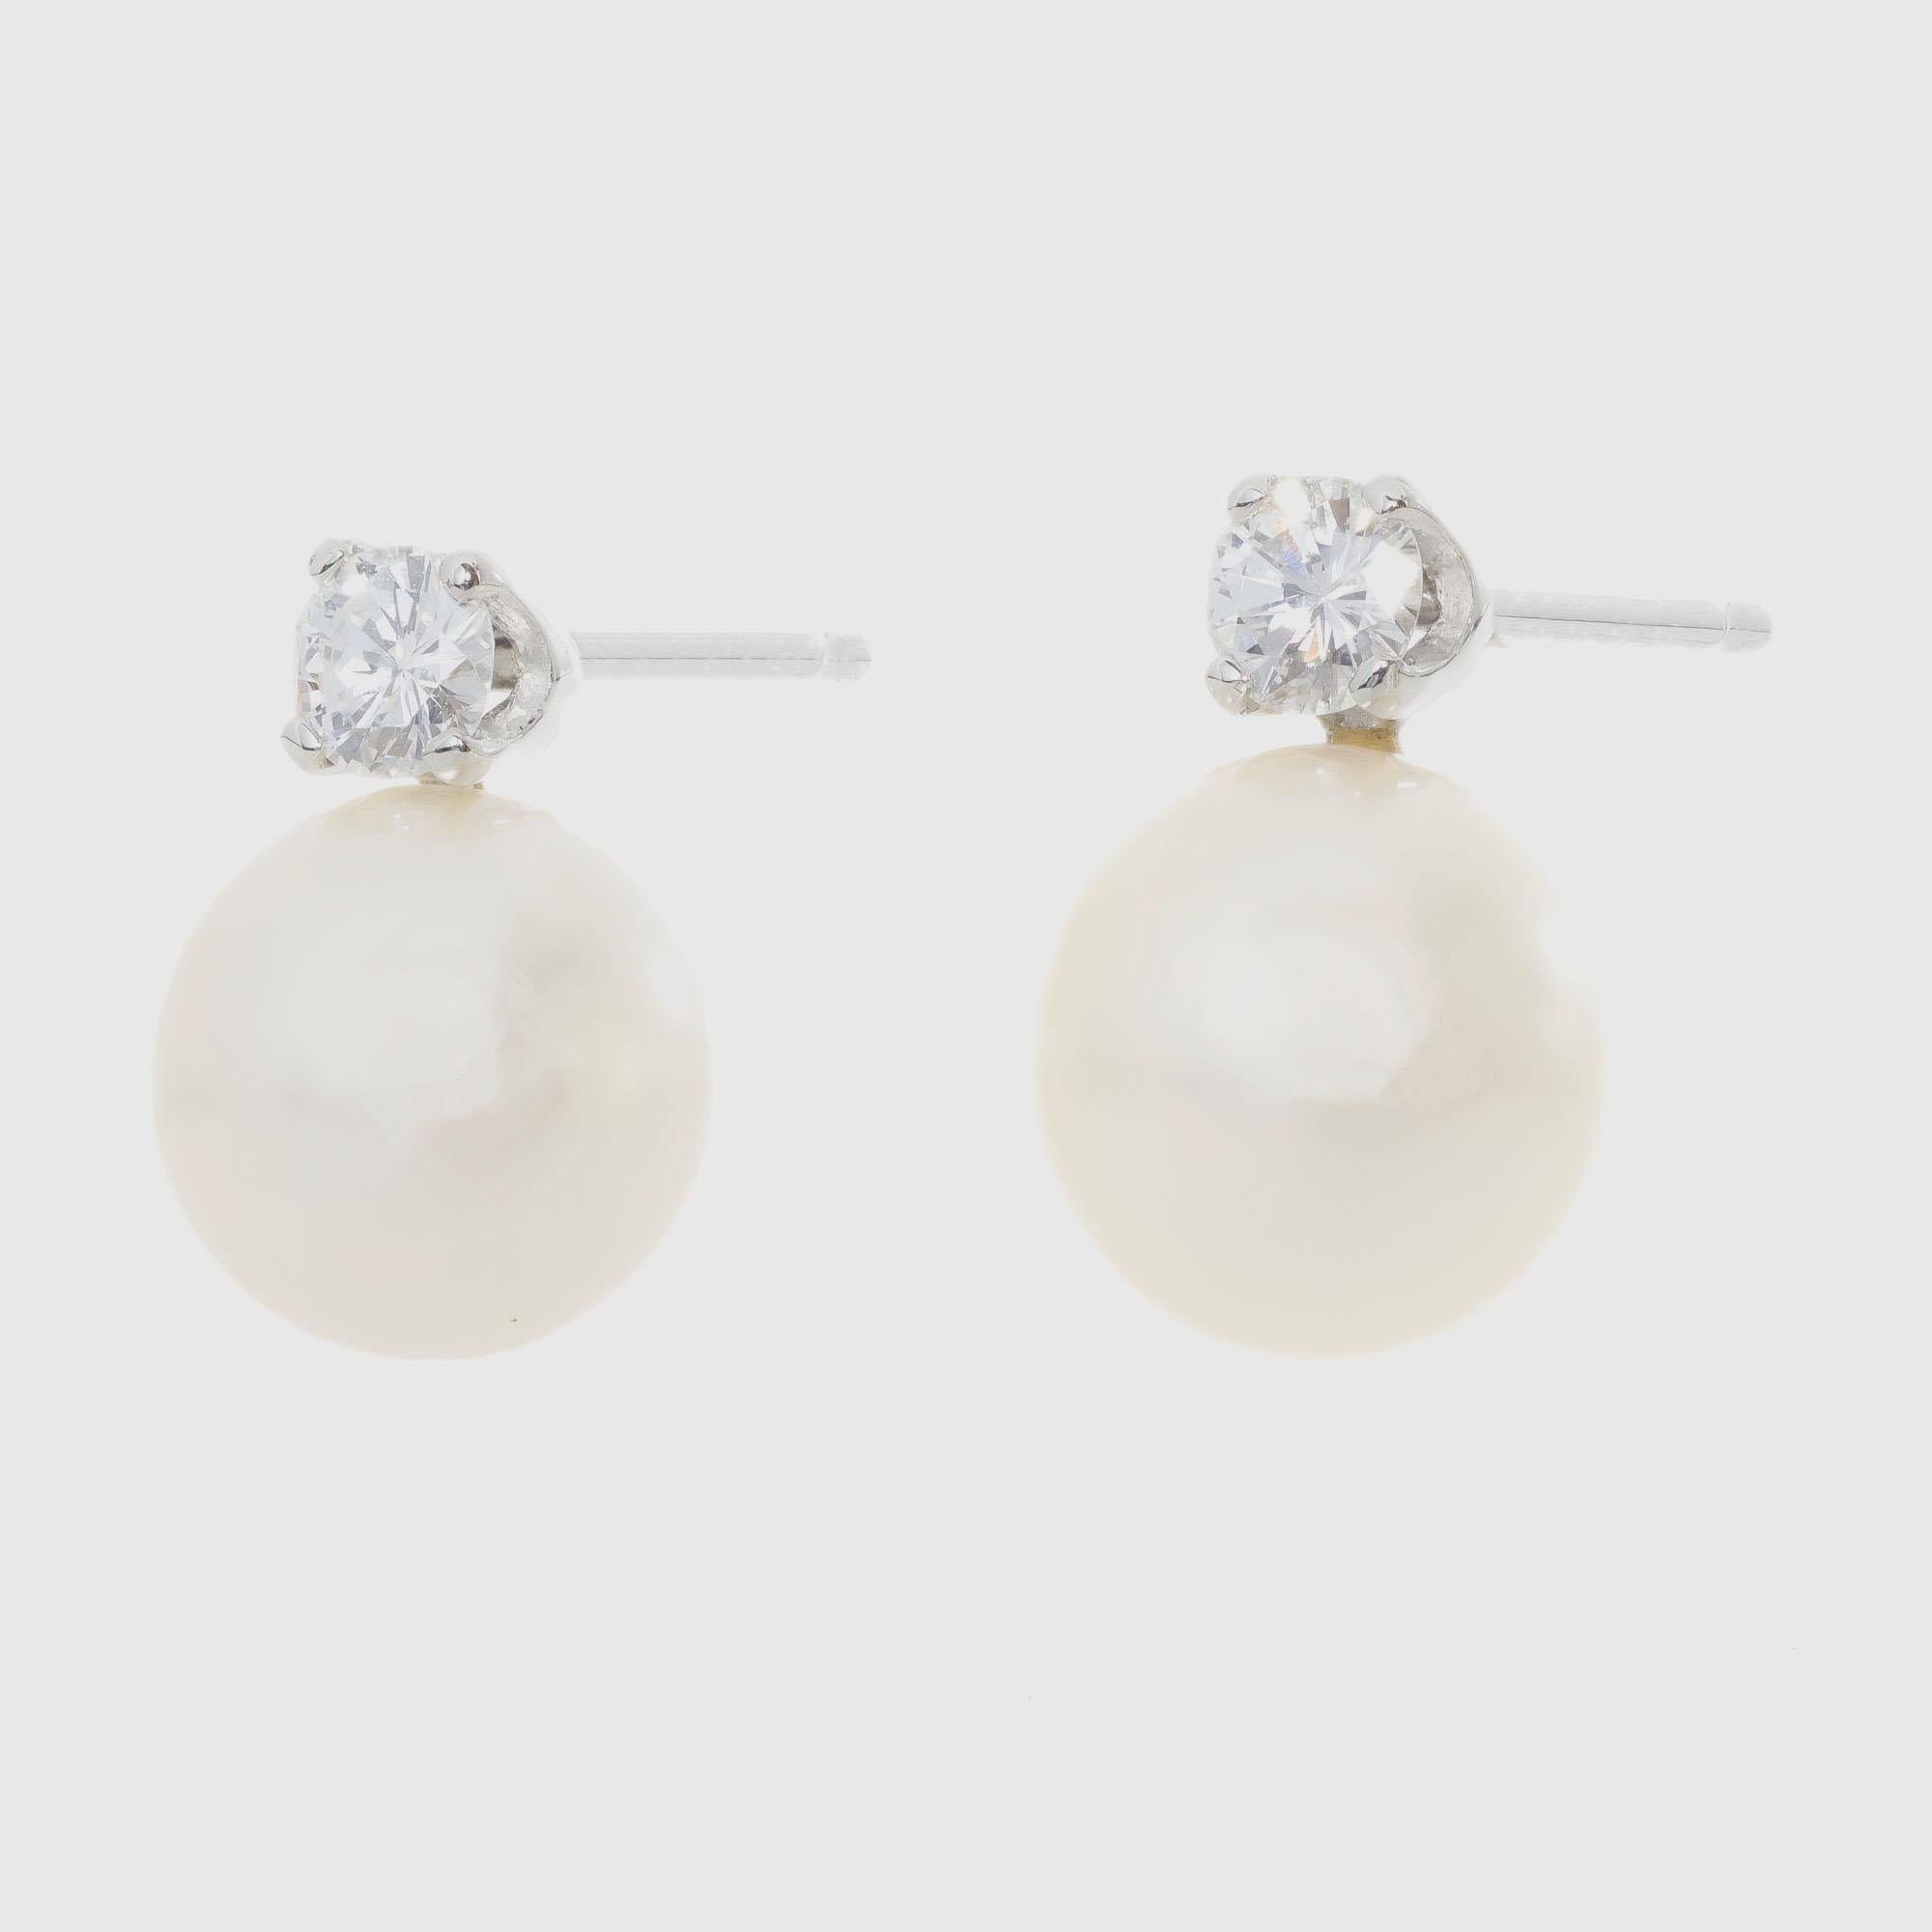 24 carat diamond earrings